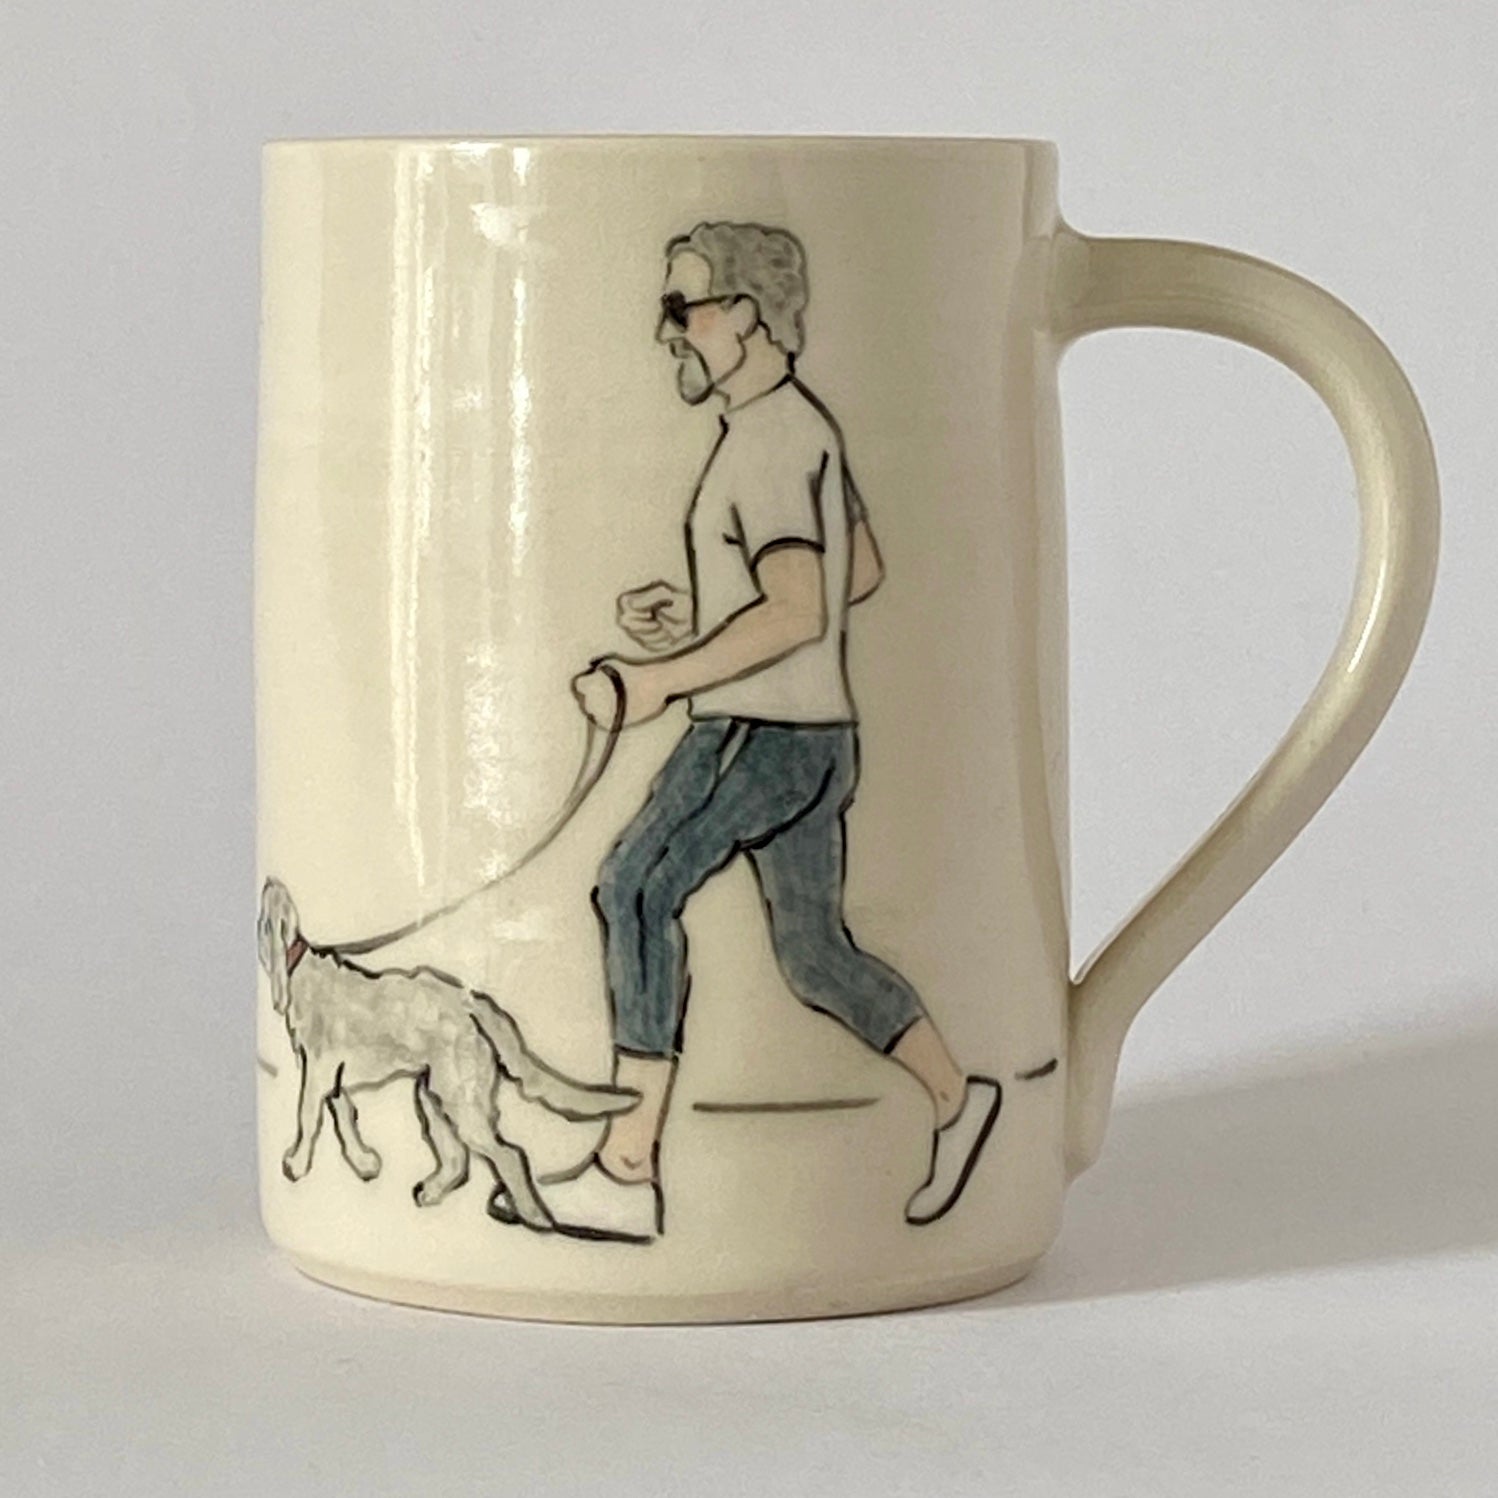 Dog-walker 02 Mug